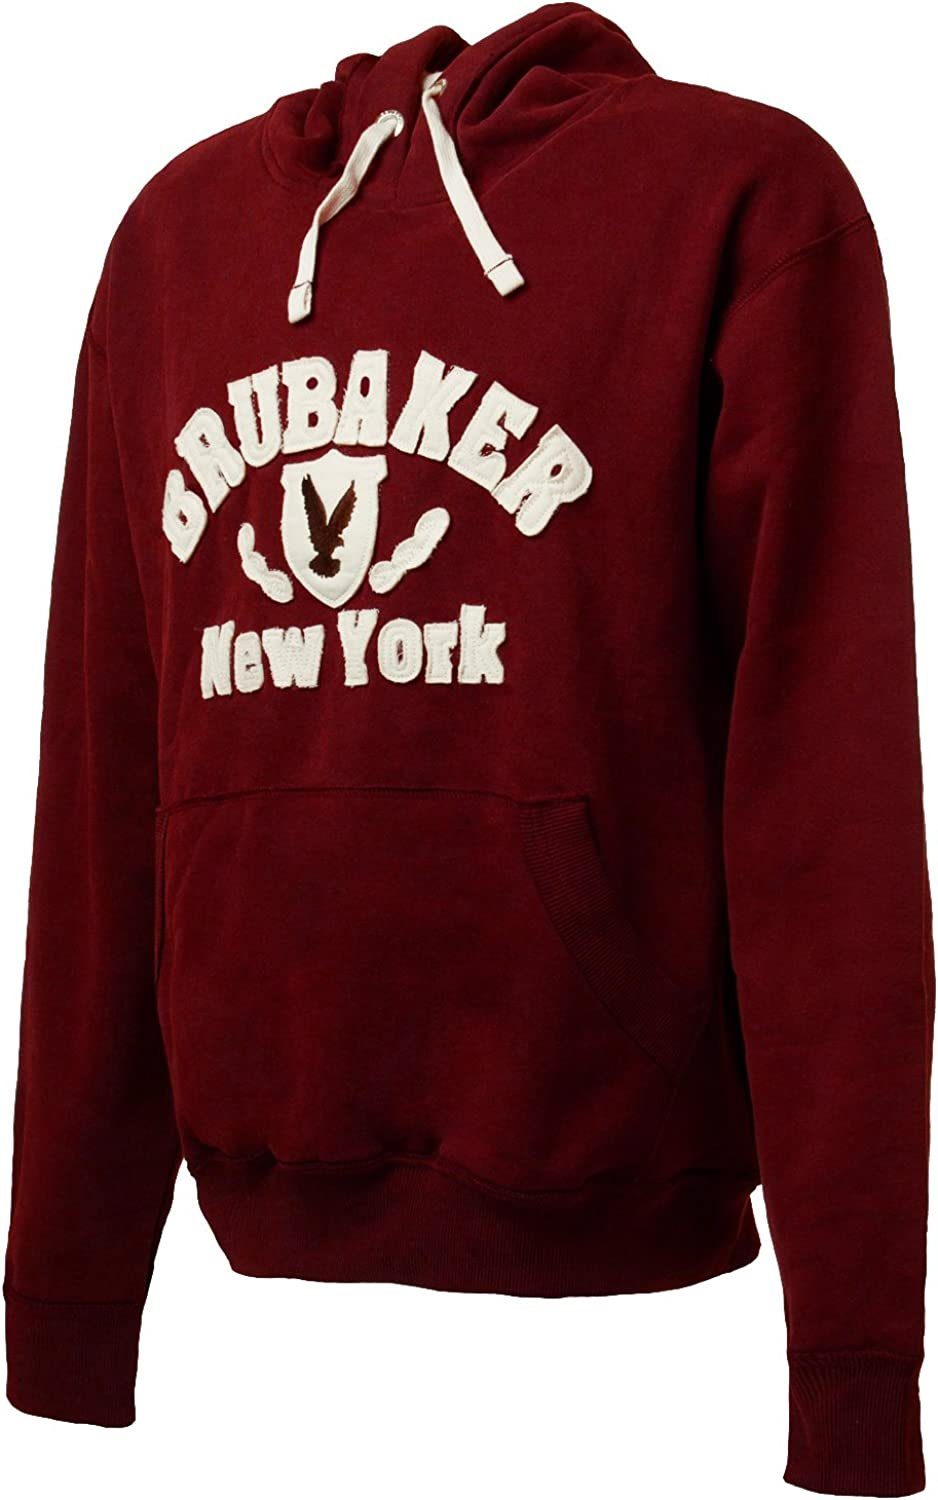 BRUBAKER Kapuzensweatshirt Eagle Sweatshirt Herren Bordeaux New (1-tlg) - Kapuze Rot Kängurutasche und Adler mit Sweater mit Logo York